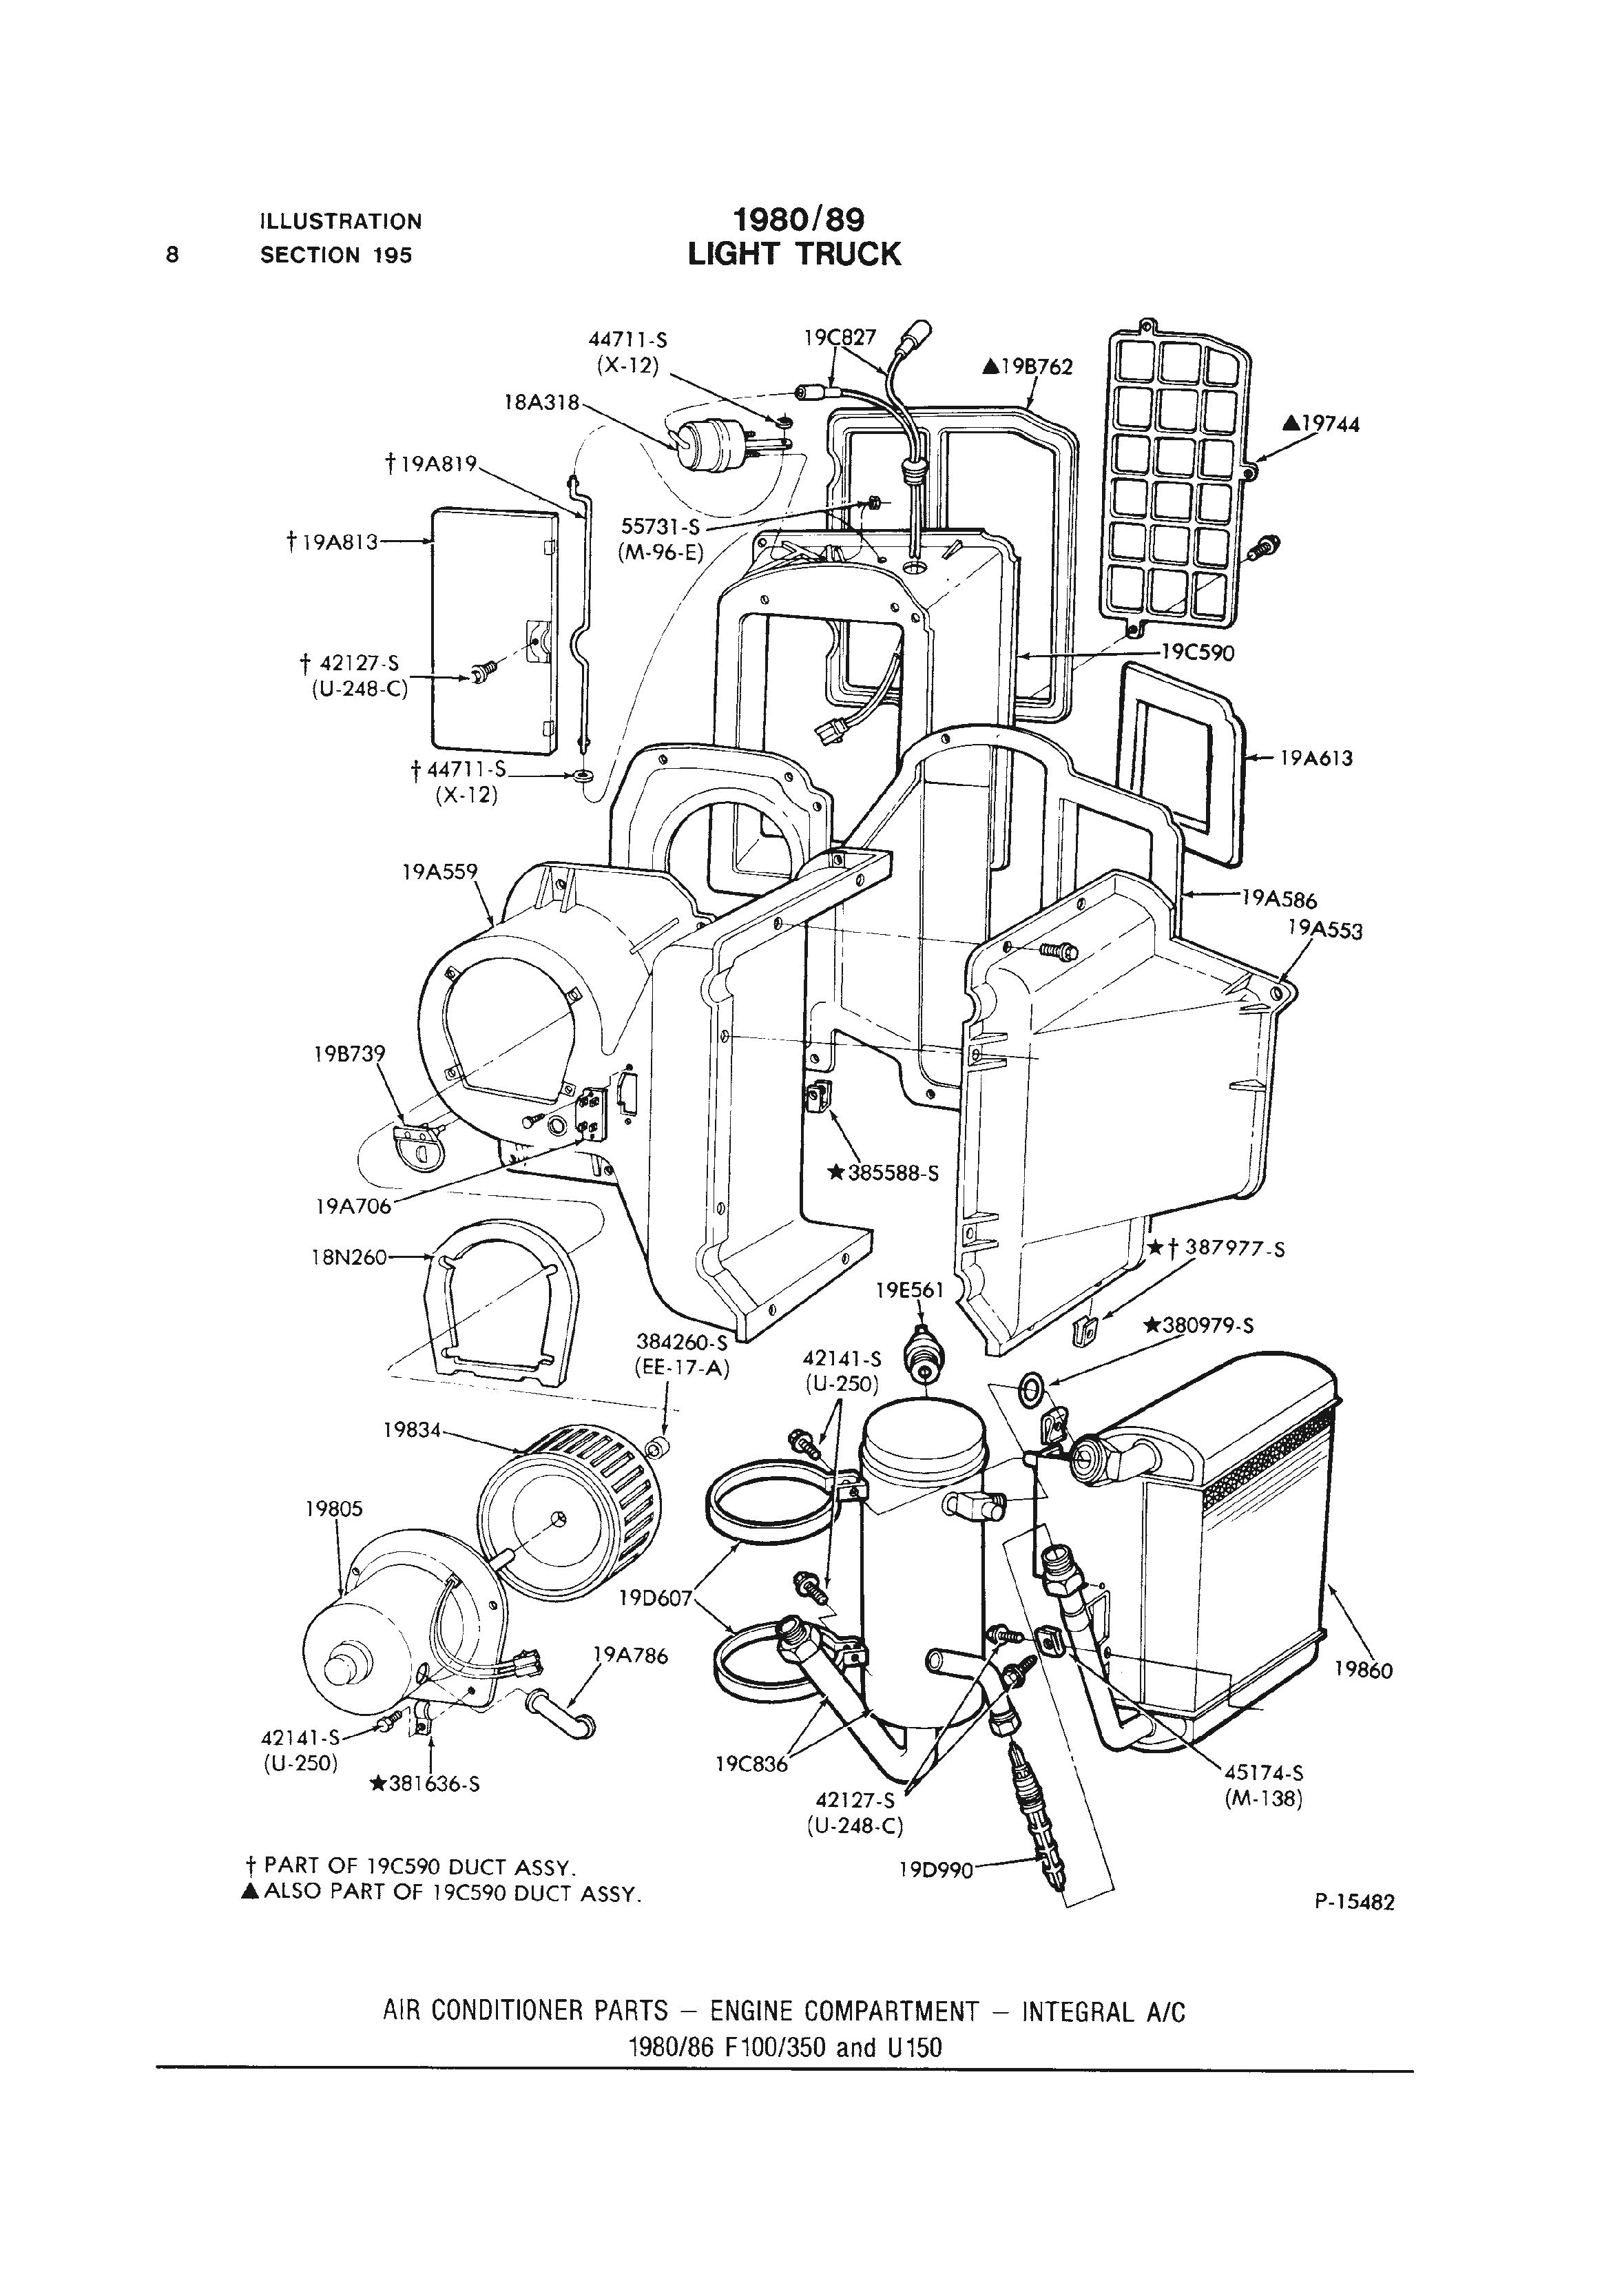 1981 hvac vacuum motors - Ford Truck Enthusiasts Forums